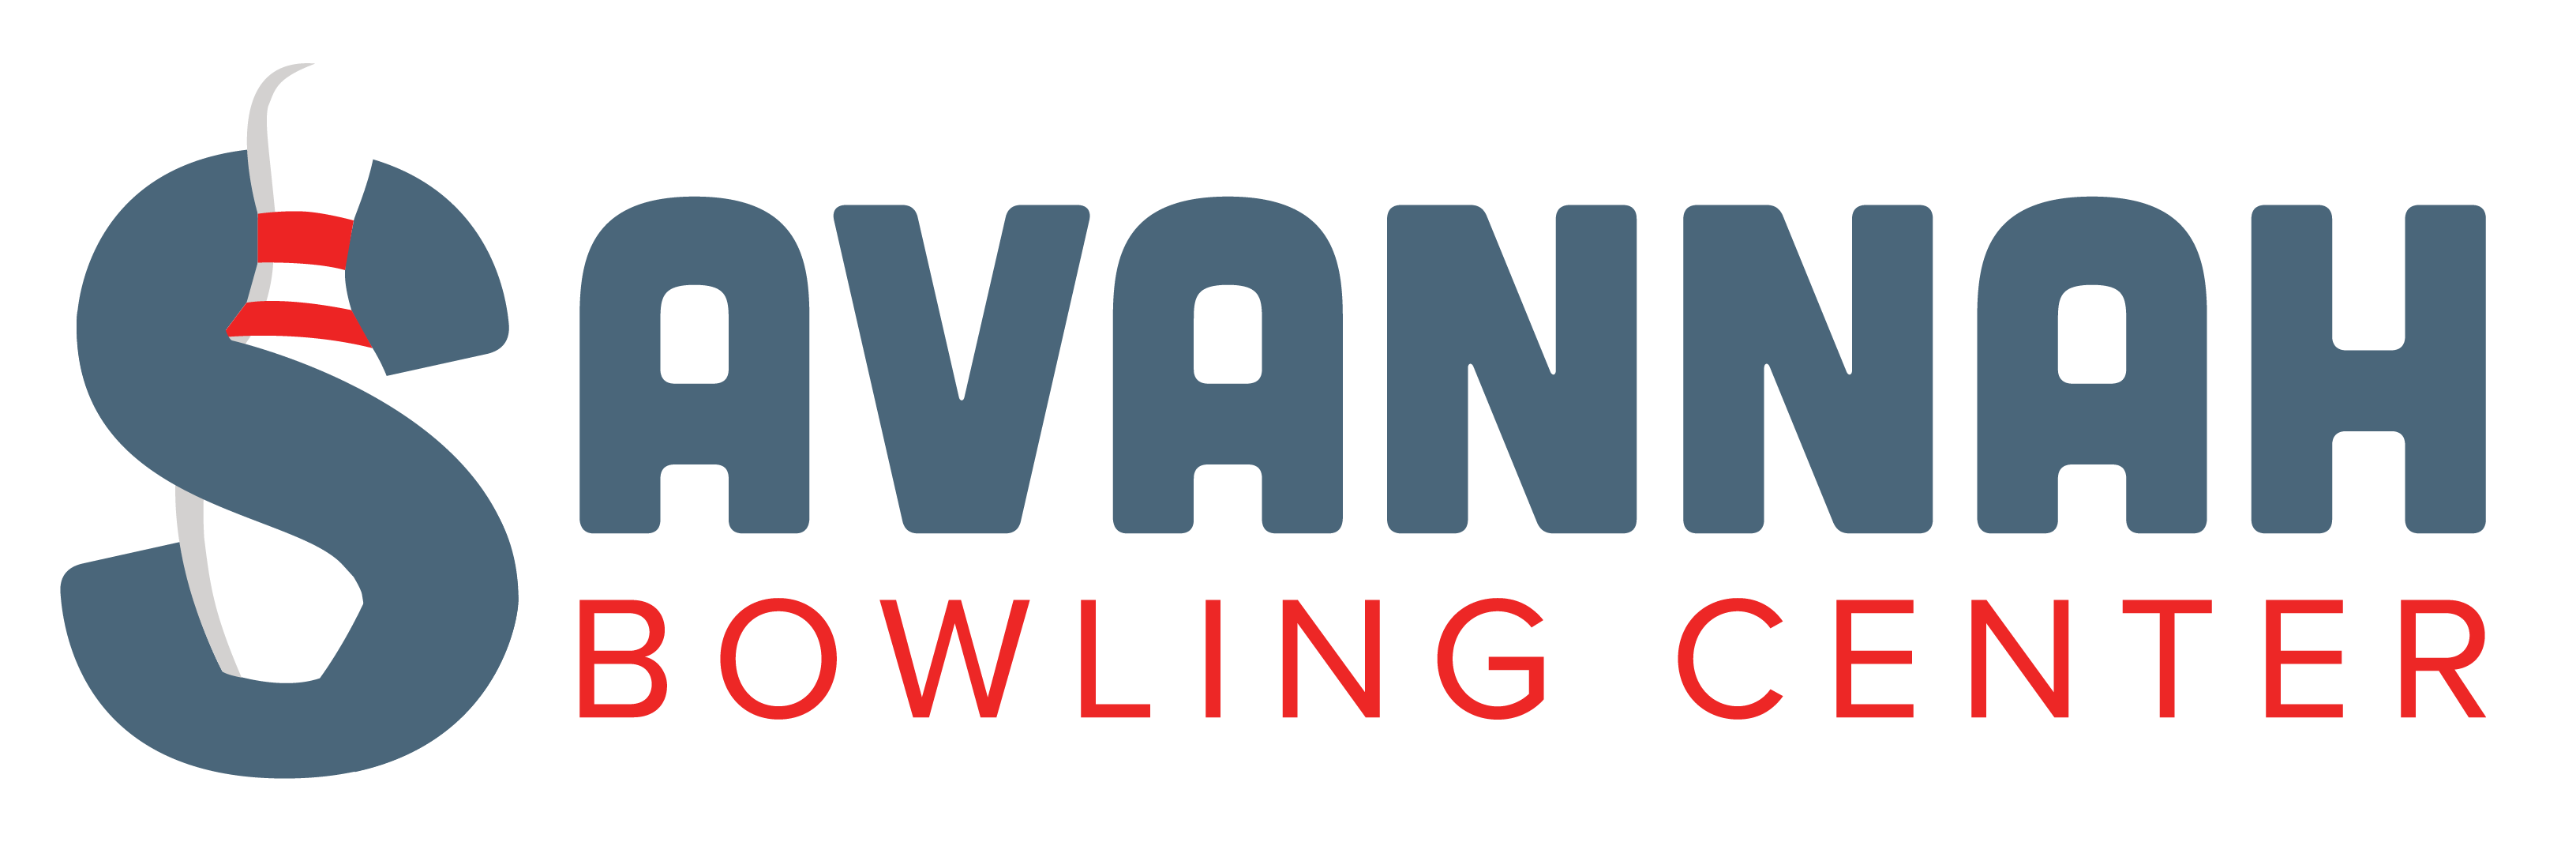 Savannah Bowling Center